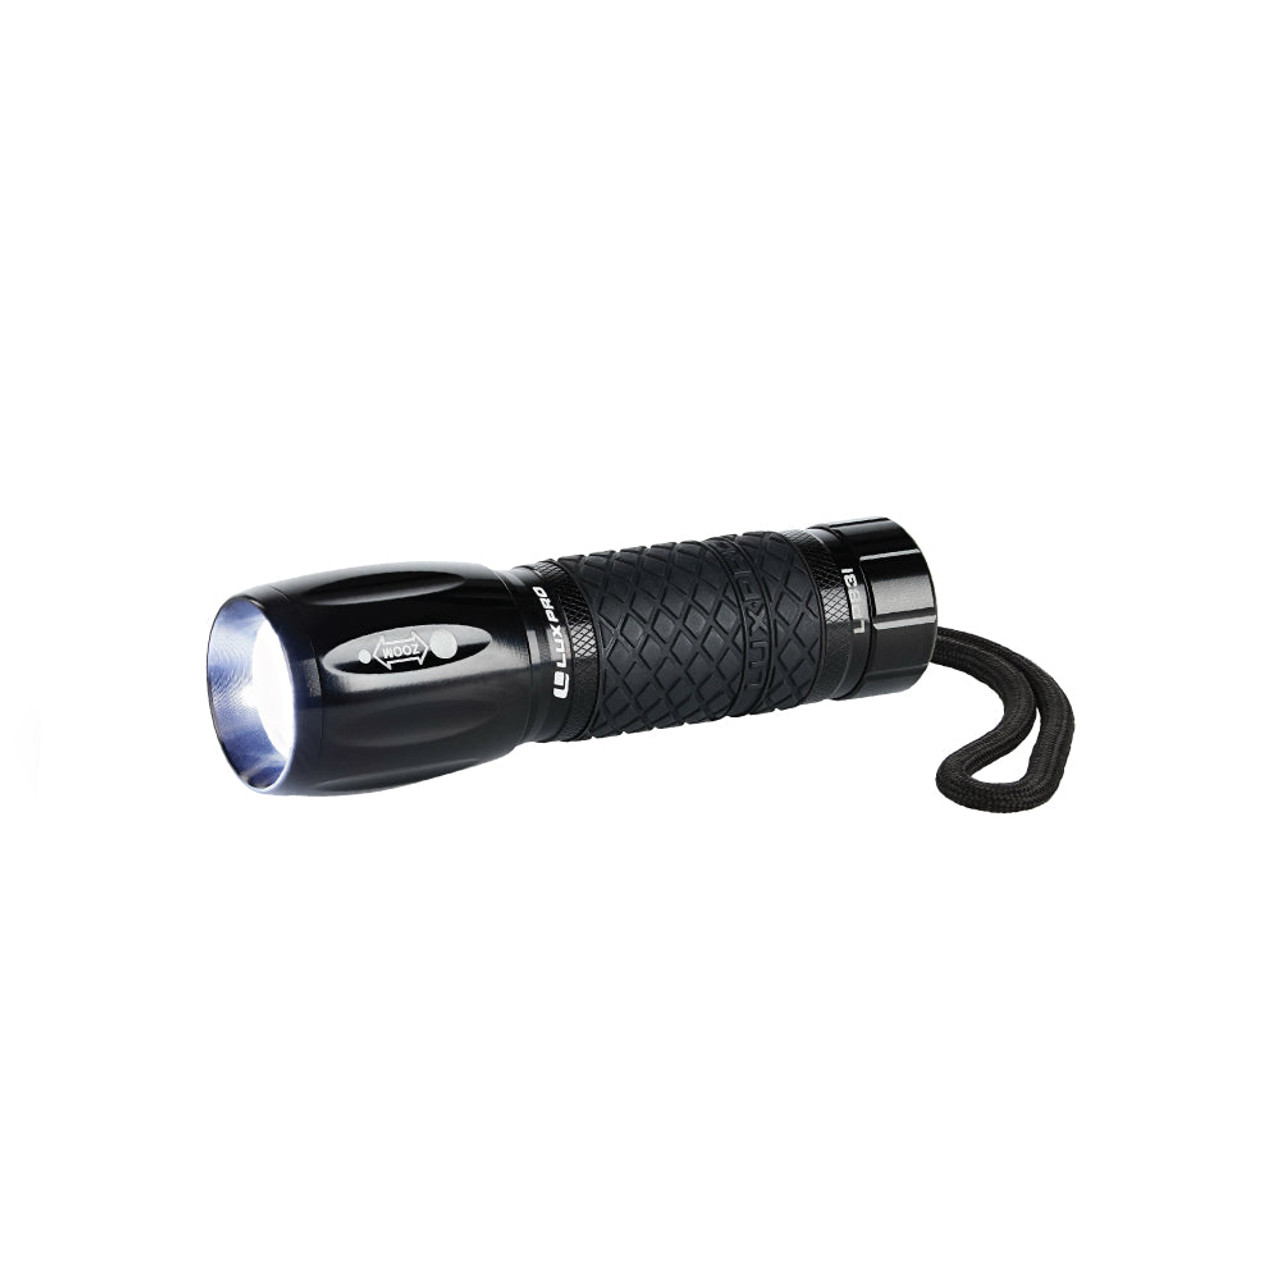 Lux-Pro Compact 290 Lumen LED Focusing Flashlight